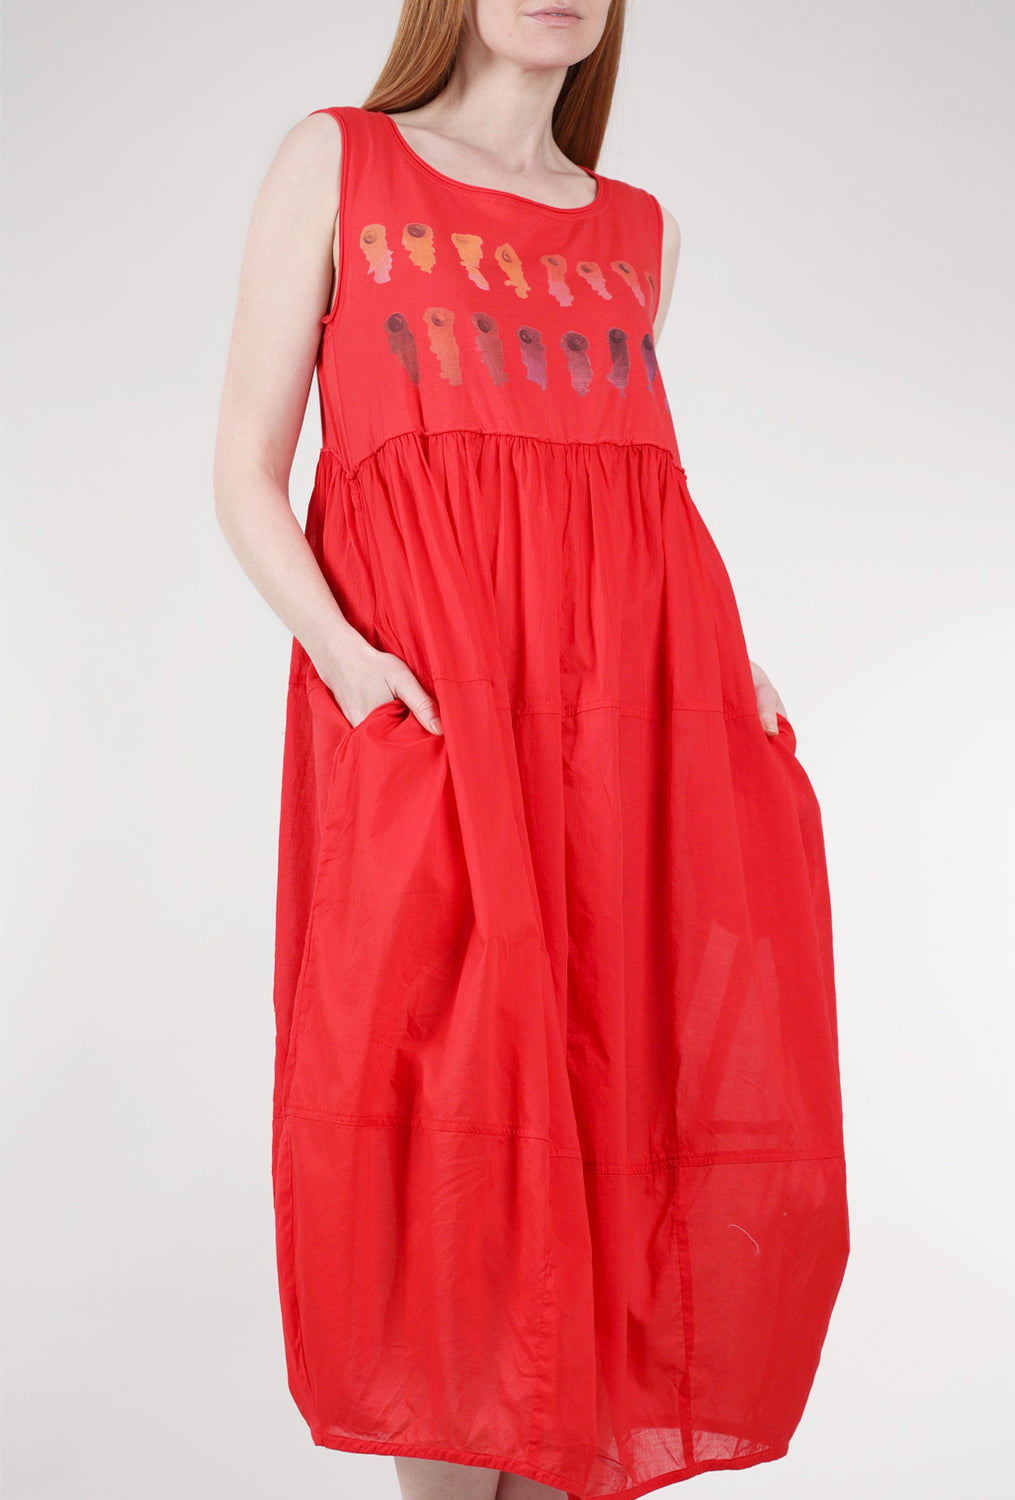 Rundholz Swatch-Style Dress, Cherry 